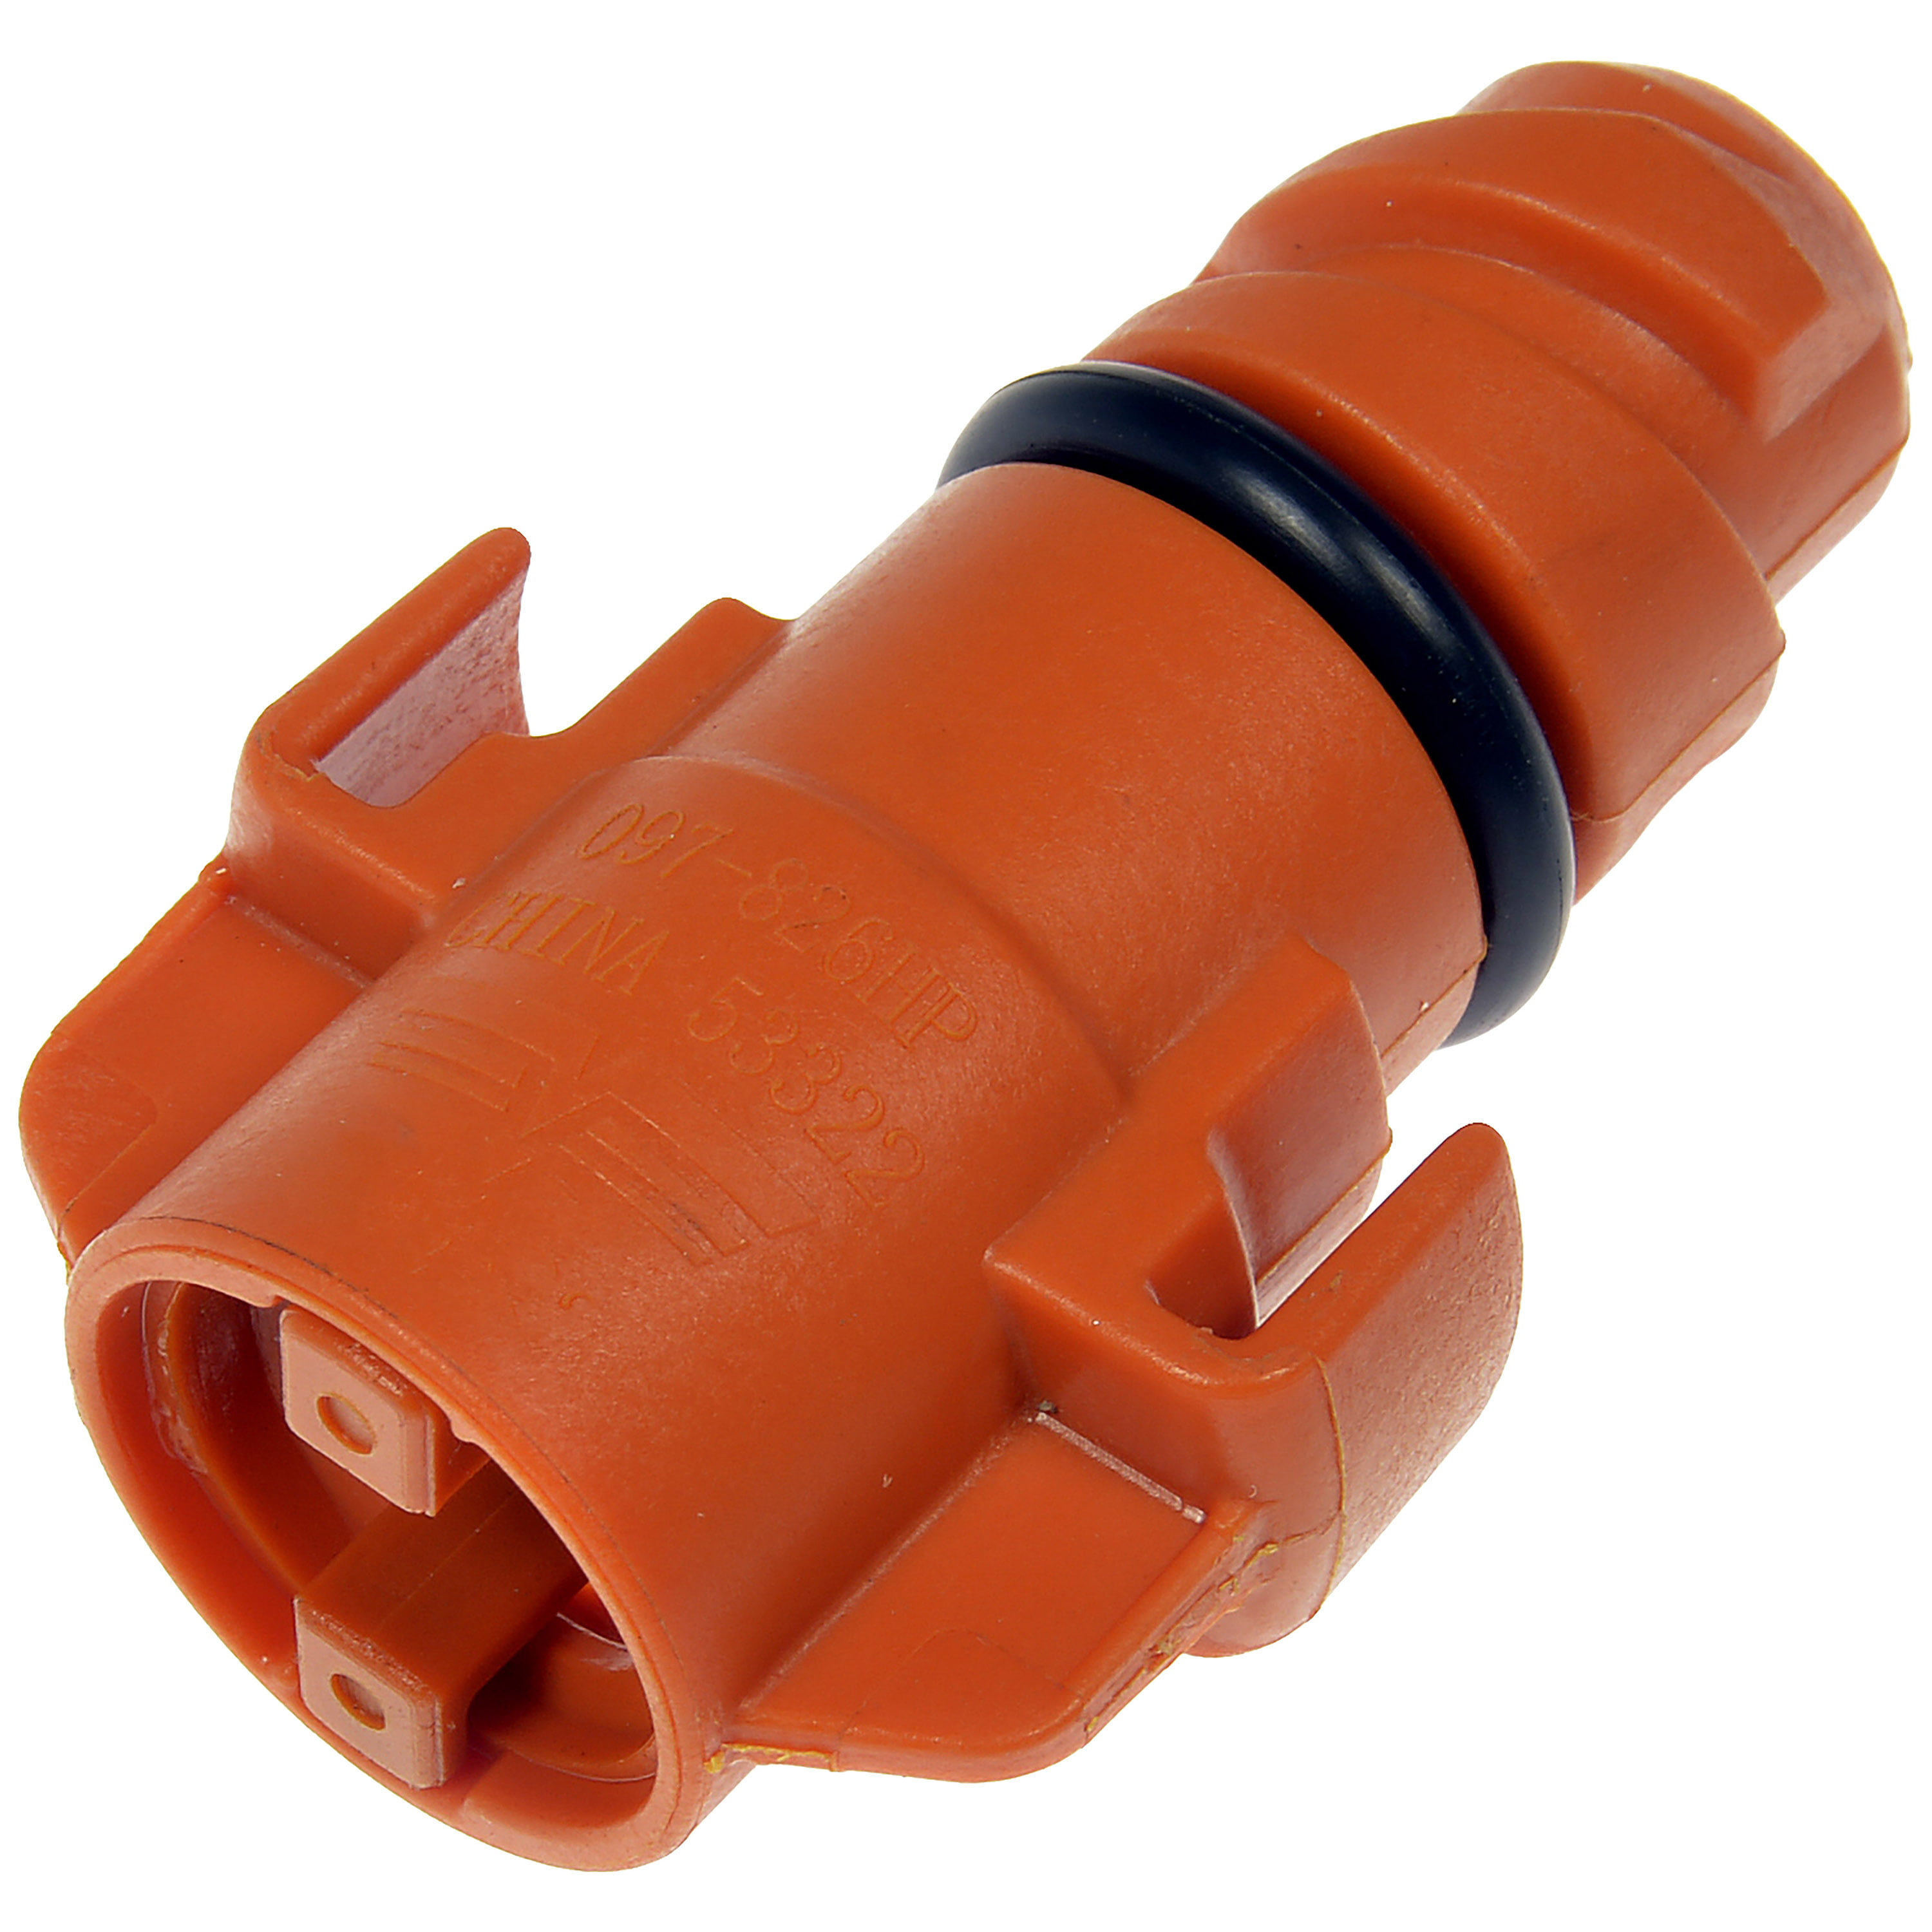 Dorman 097-826 Plastic Oil Drain Plug for Select Ford/Lincoln Models 5 Pack